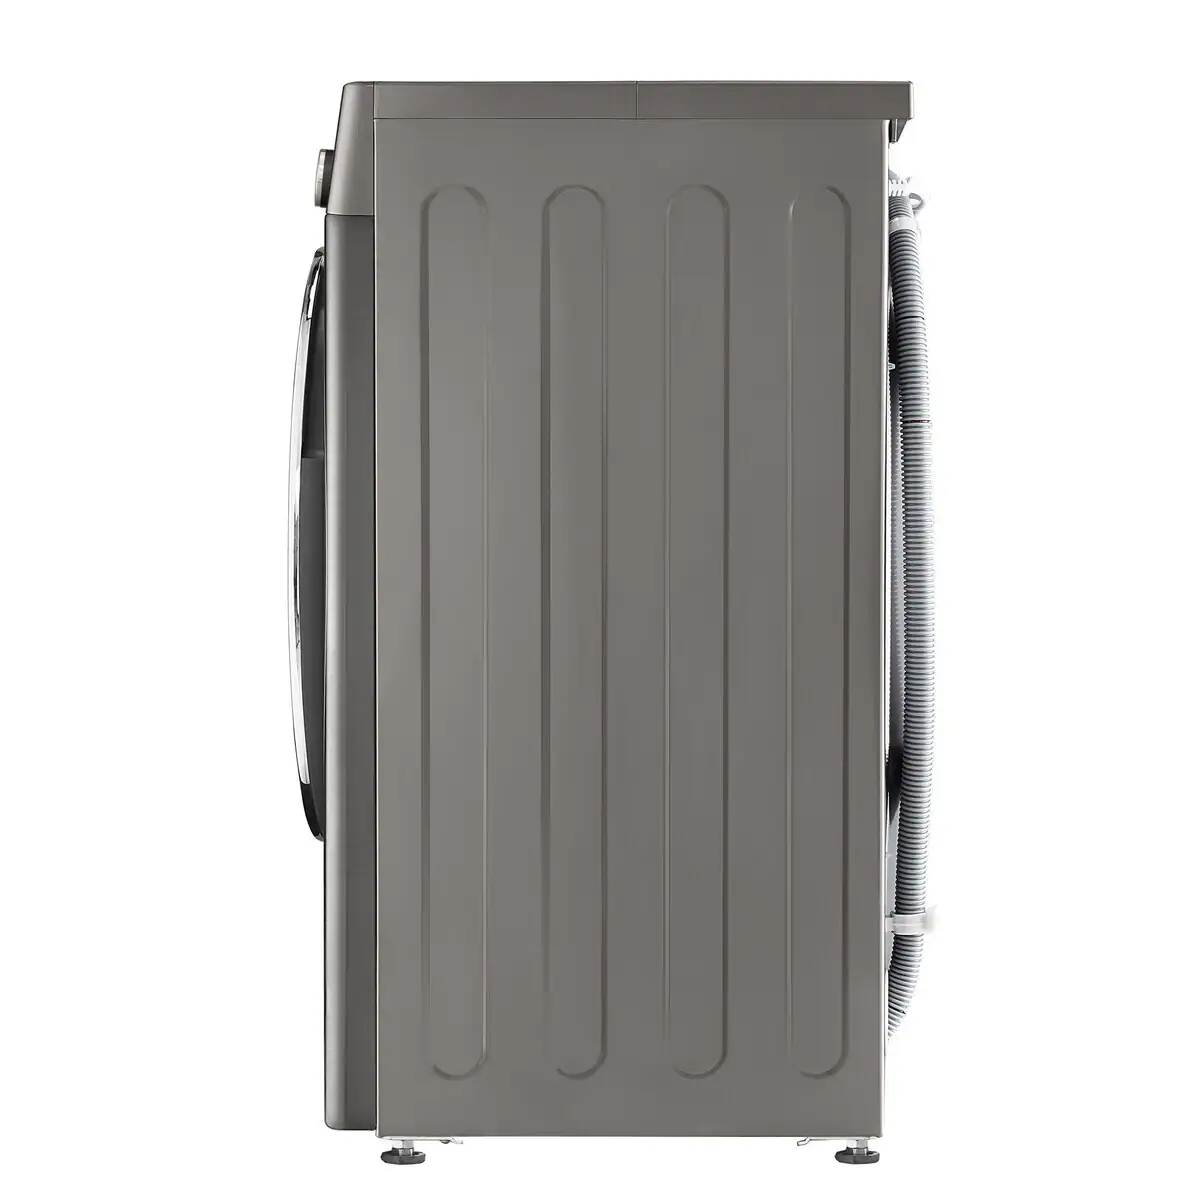 LG FV7S90V2 Vivace 9kg 1200rpm Washer 9 公斤 1200 轉 人工智能洗衣機 (TurboWash™ 59 分鐘快洗)